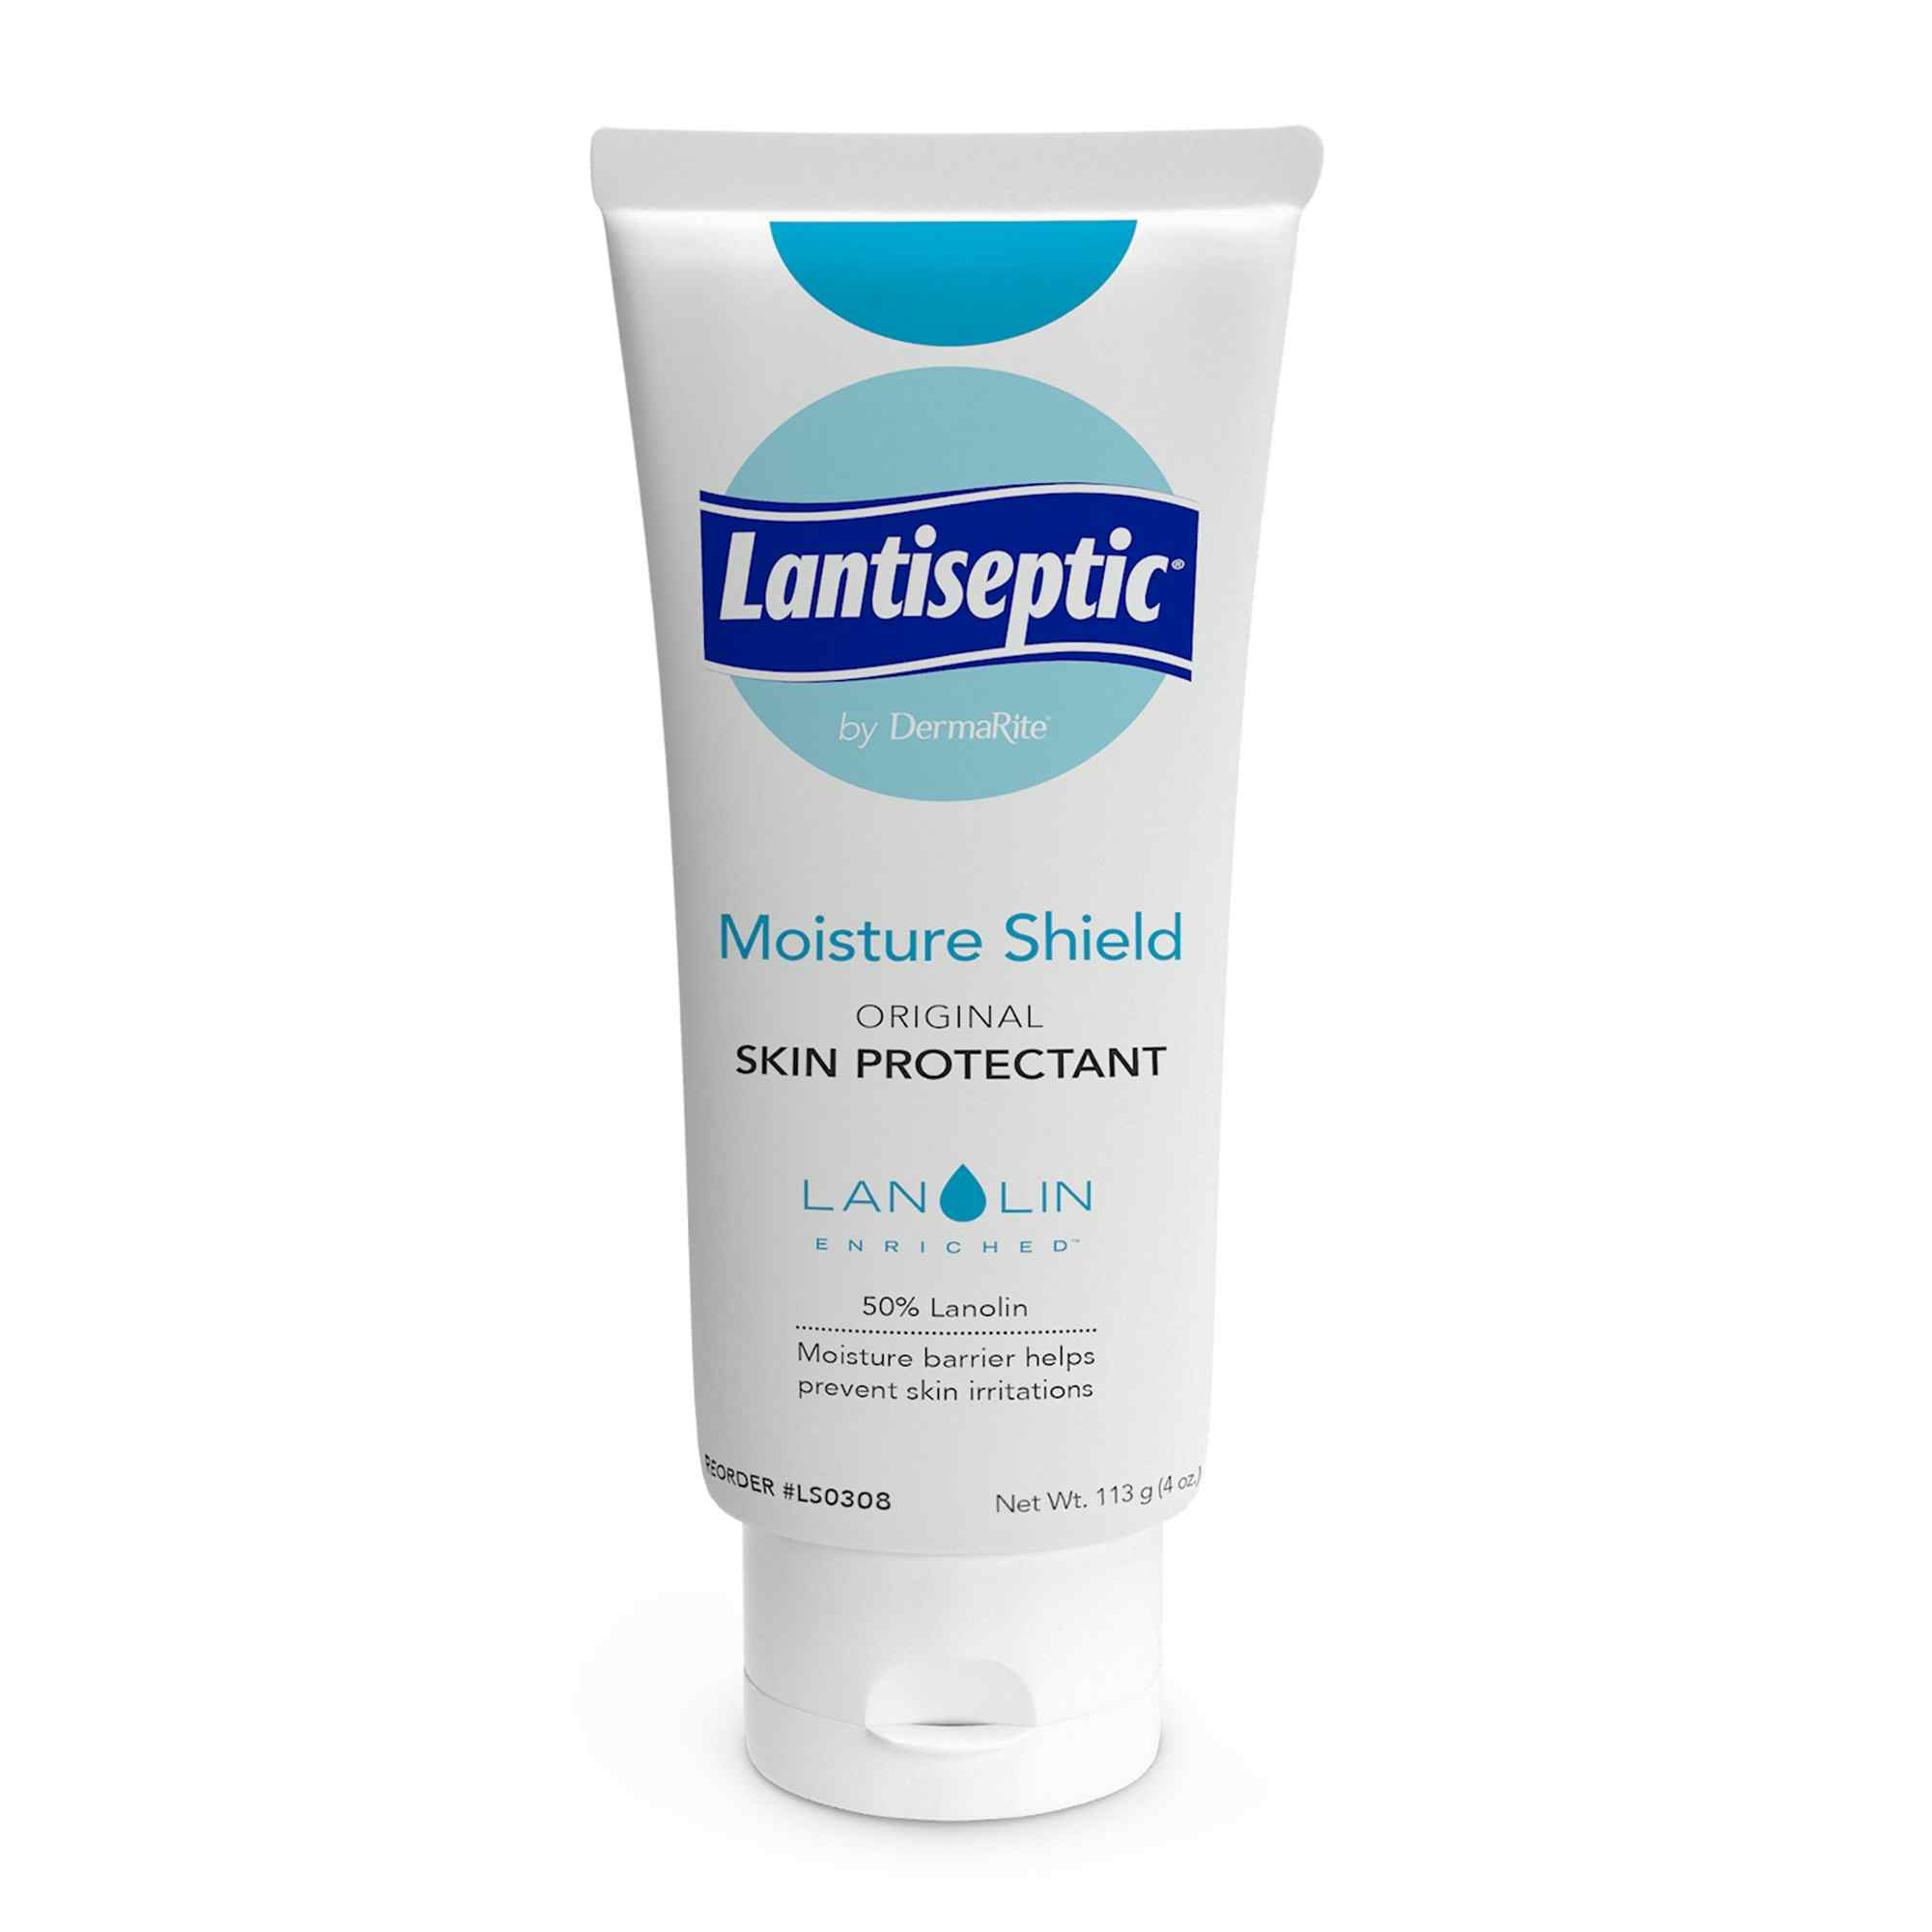 Lantiseptic Moisture Shield Skin Protectant, Tube, Scented, 4 oz., LS0308, Case of 12 Tubes